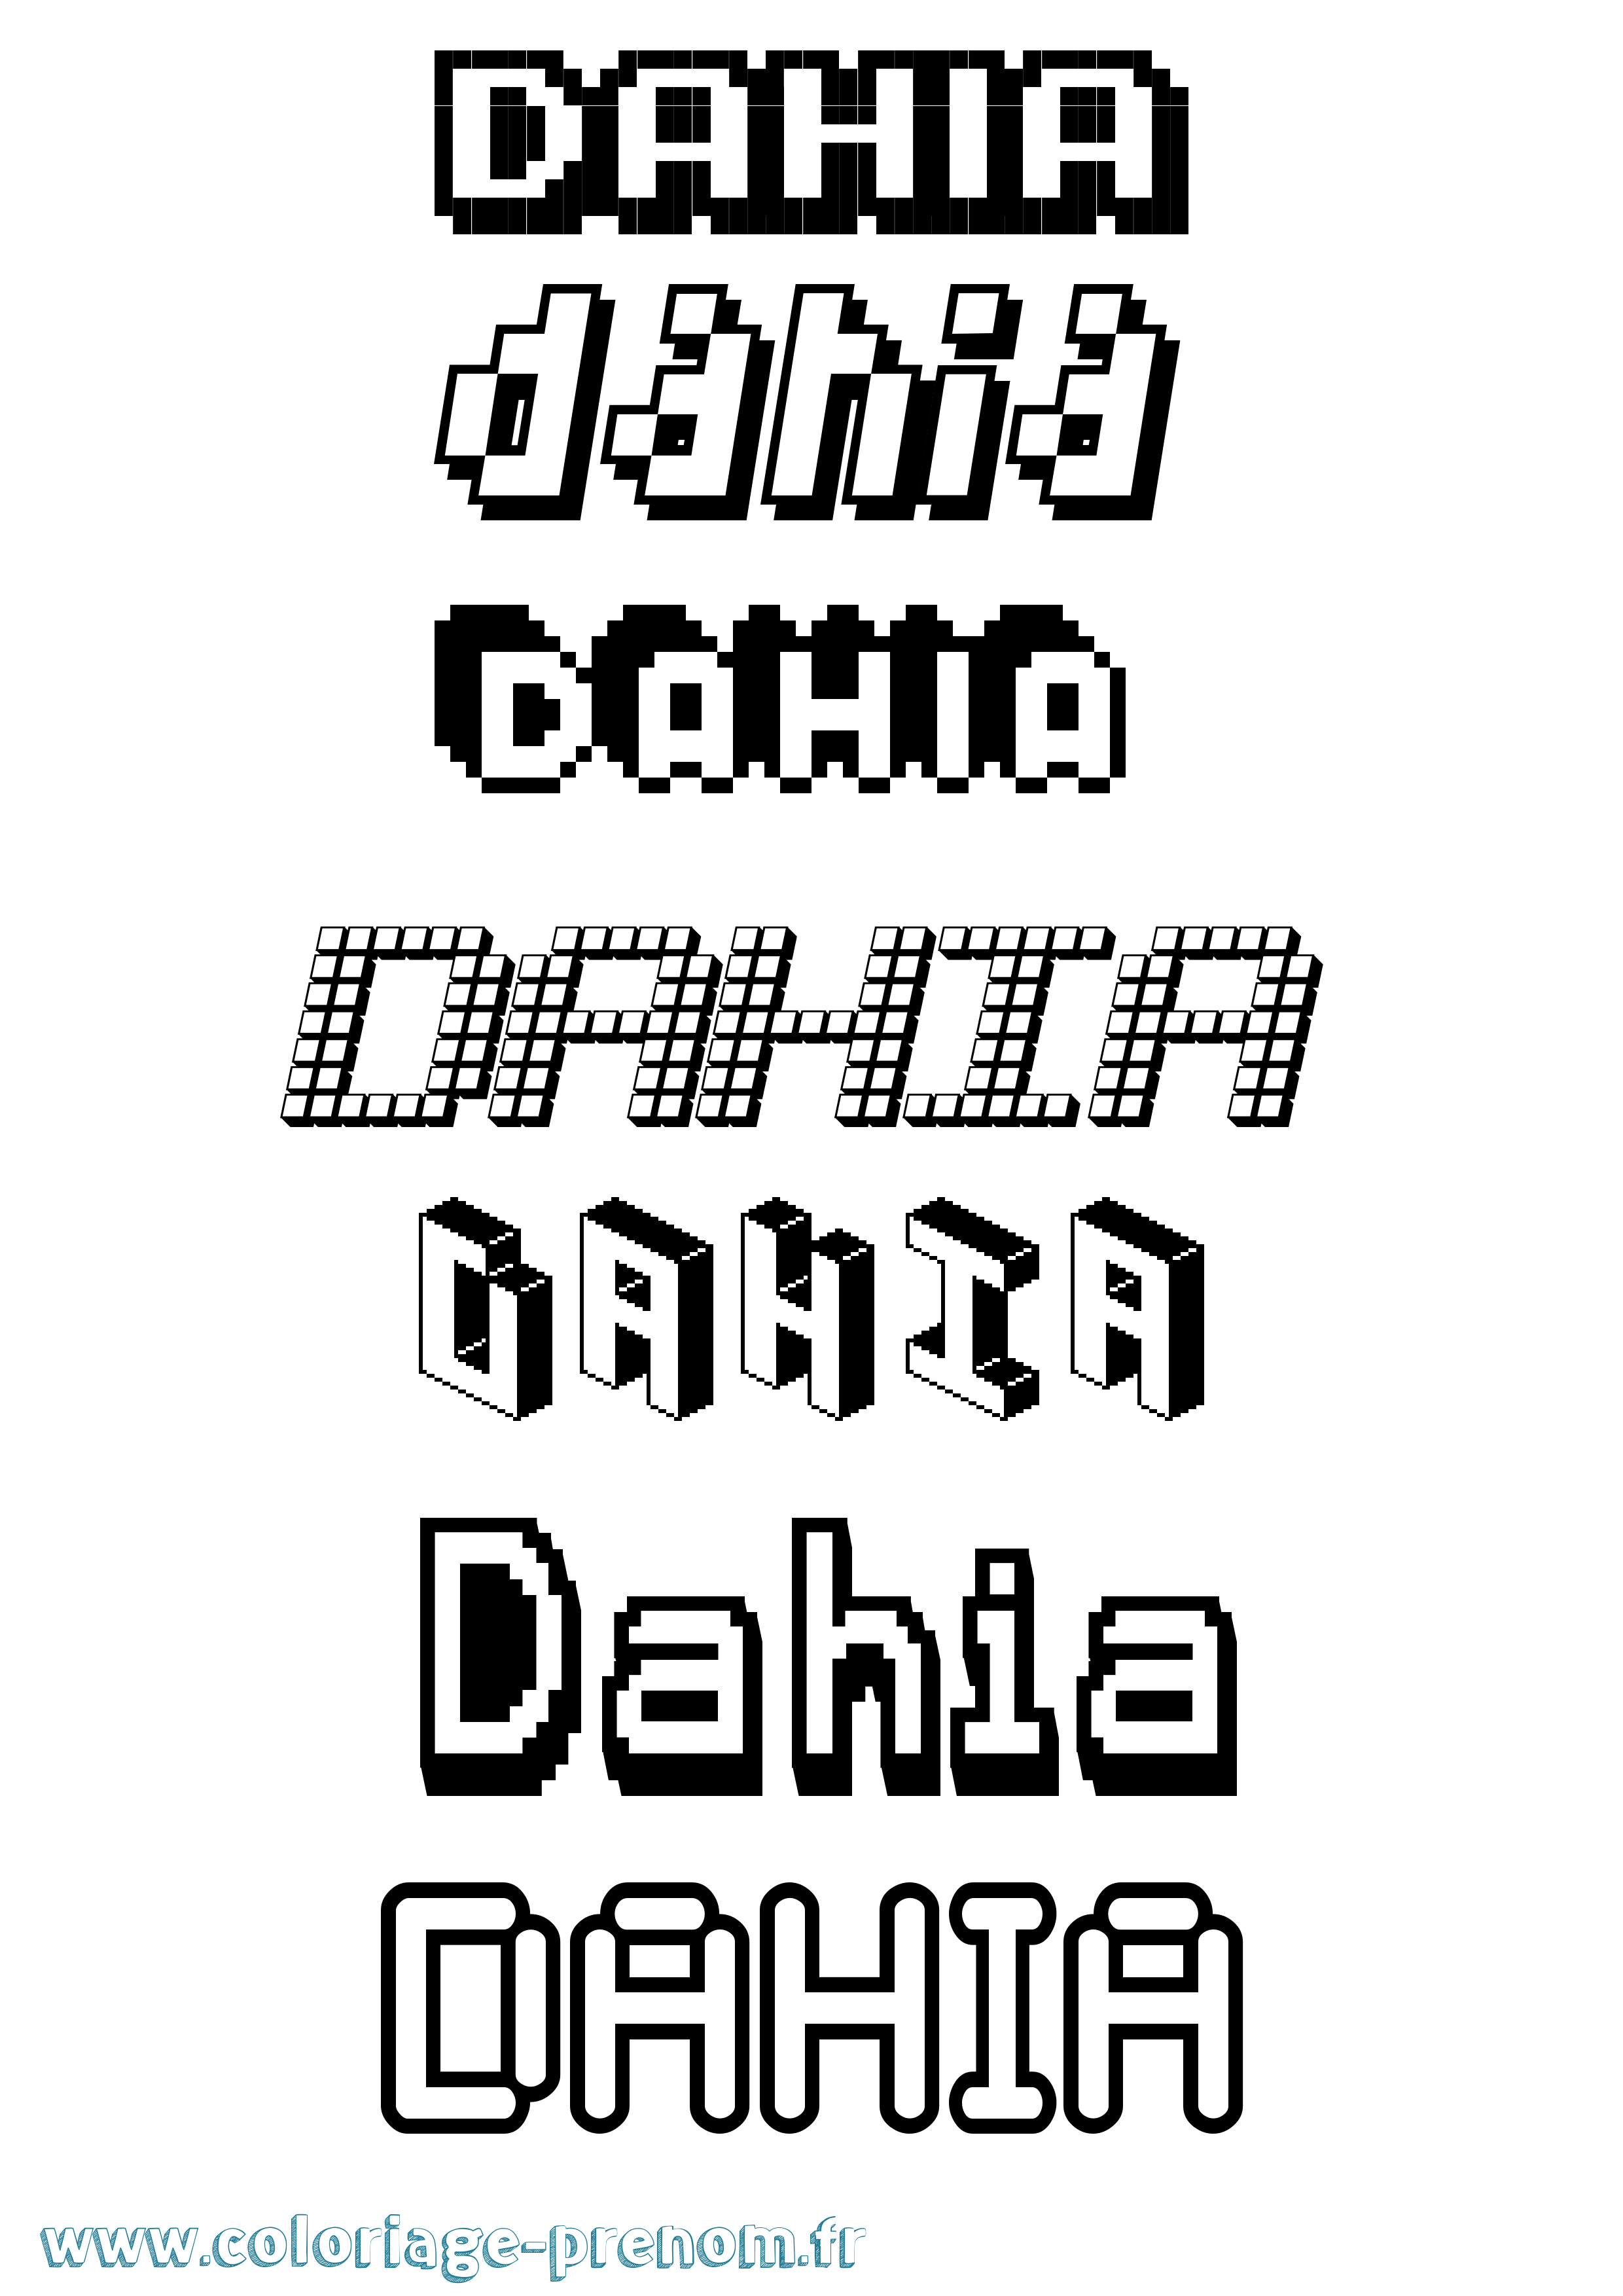 Coloriage prénom Dahia Pixel